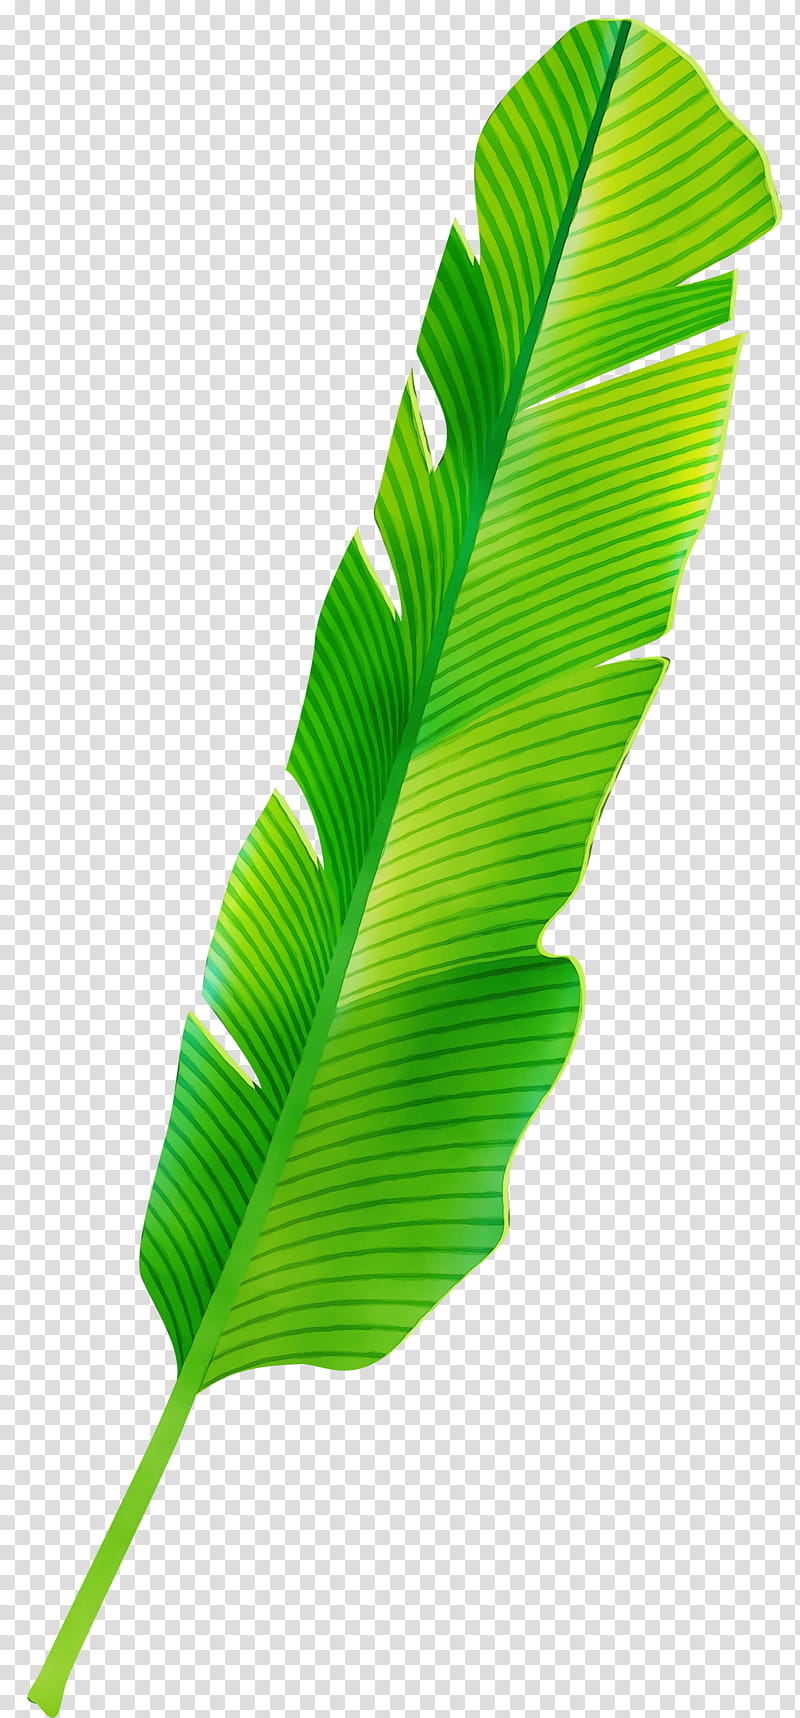 Banana Leaf, Watercolor, Paint, Wet Ink, Palm Trees, Tropics, Palmleaf Manuscript, Green transparent background PNG clipart